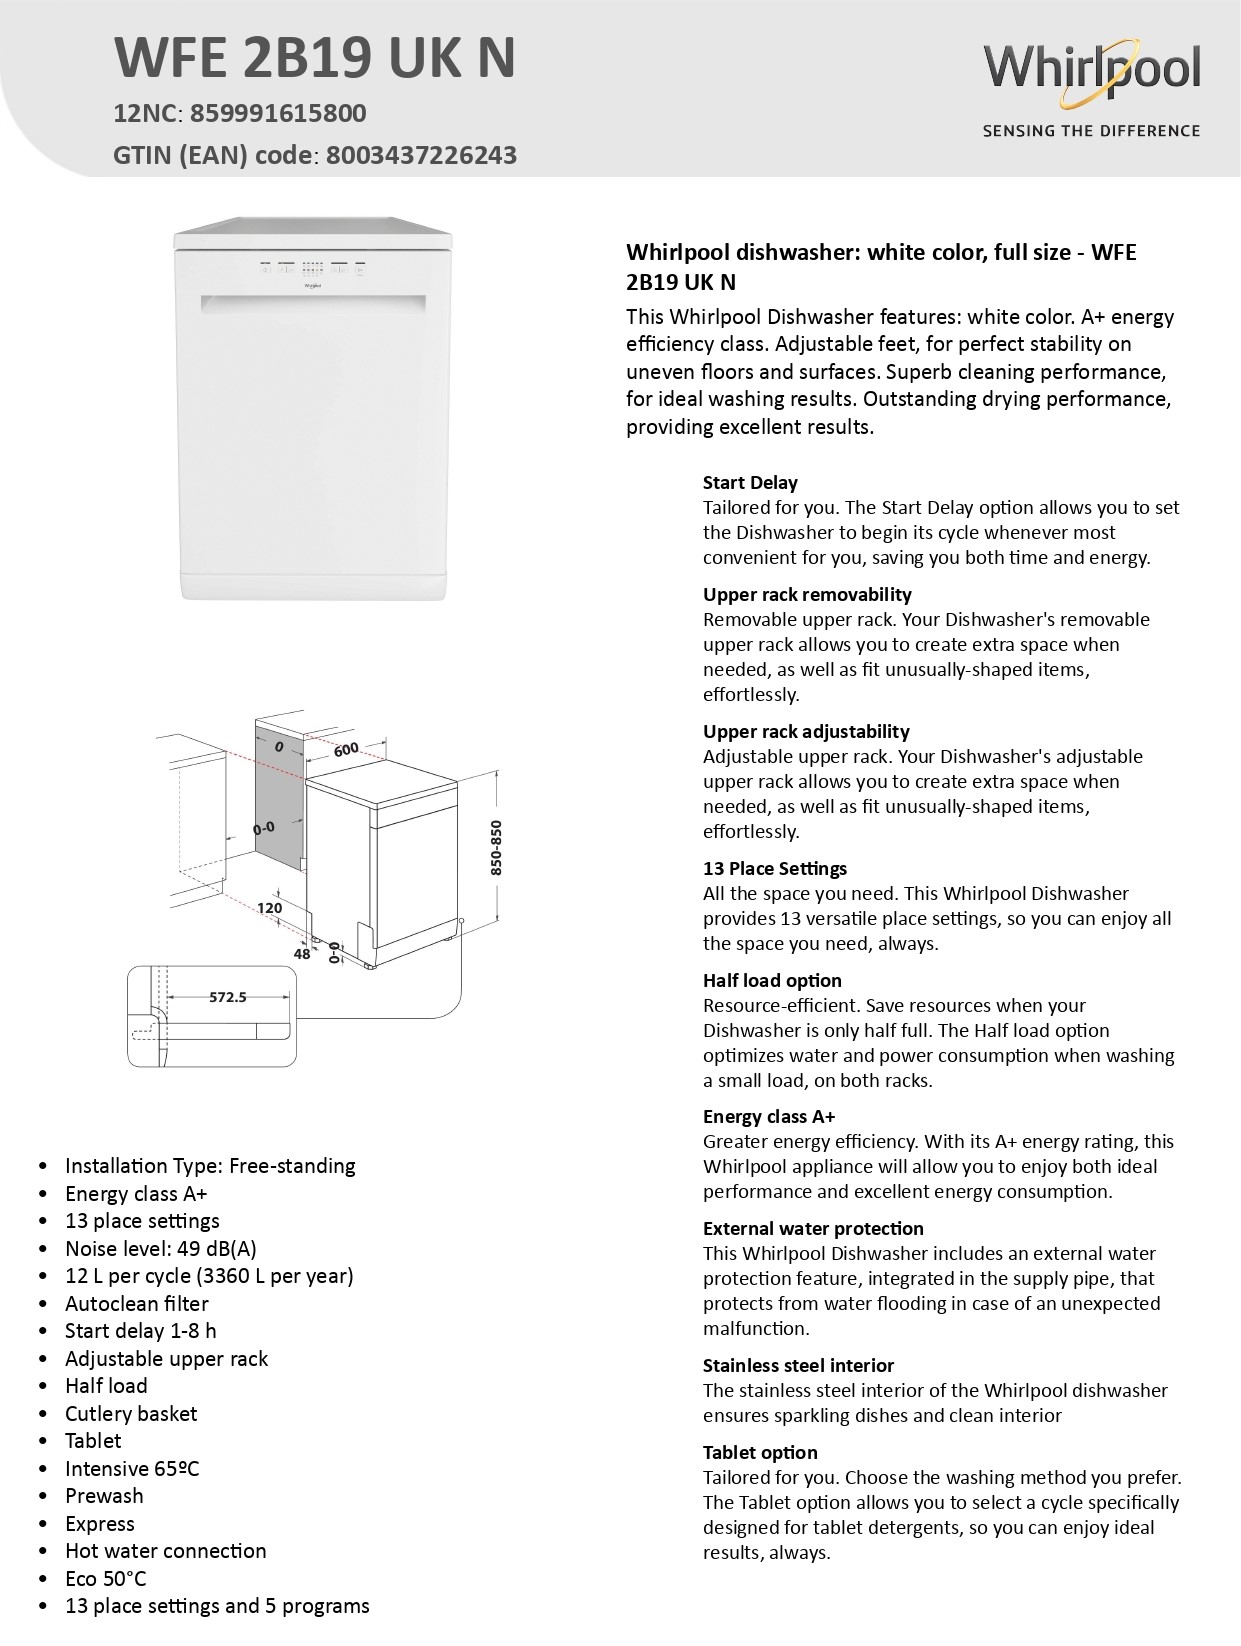 Whirlpool Dishwasher Full Size, White - WFE 2B19 UK N